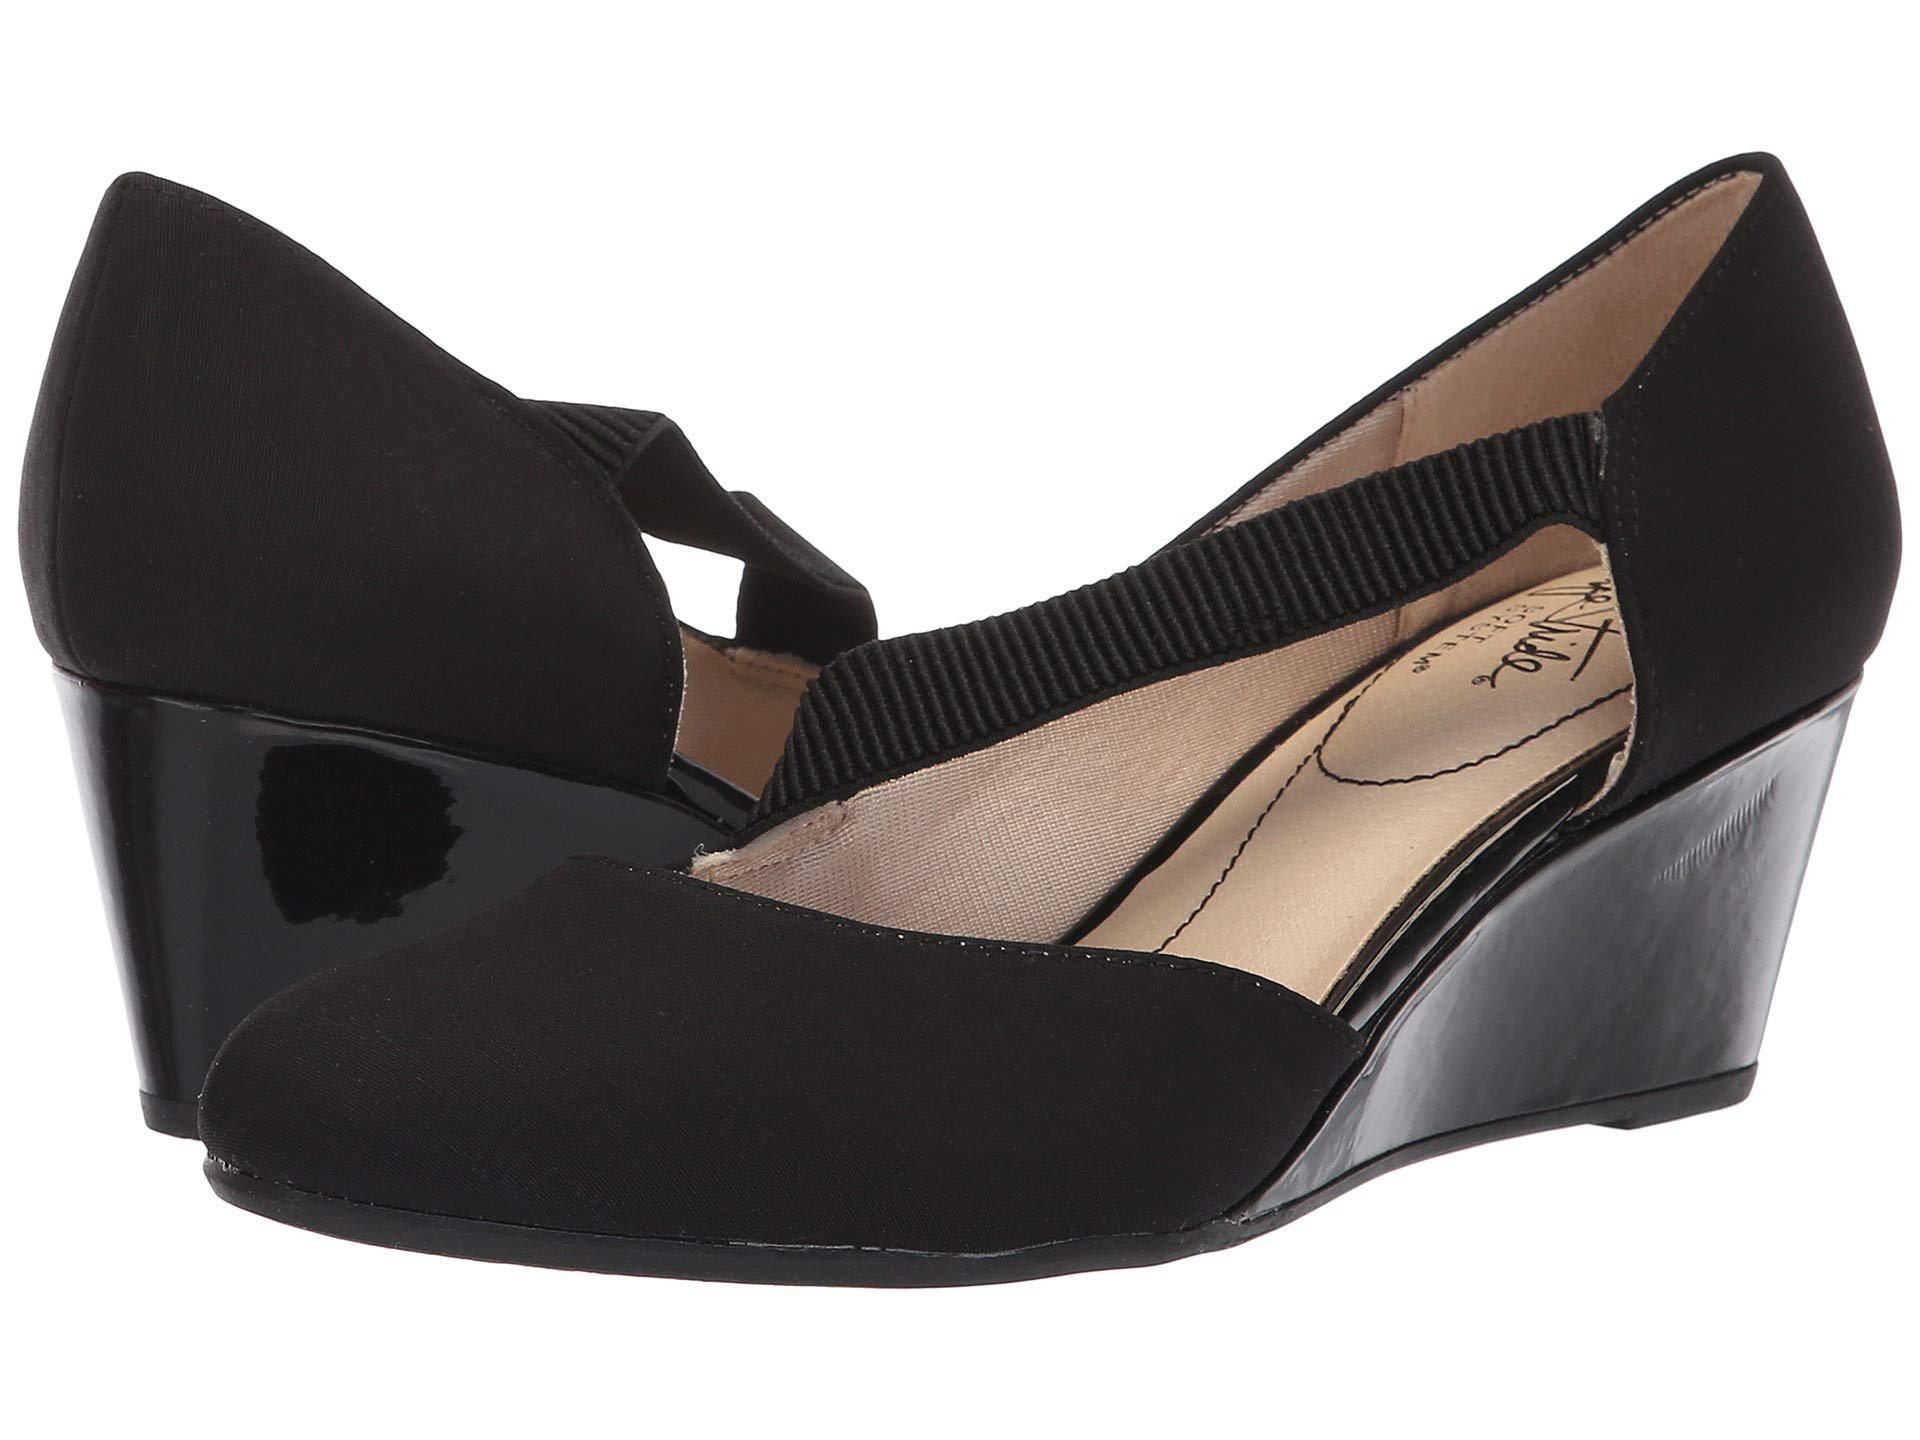 LifeStride Decisions (black) Women's Wedge Shoes Lyst